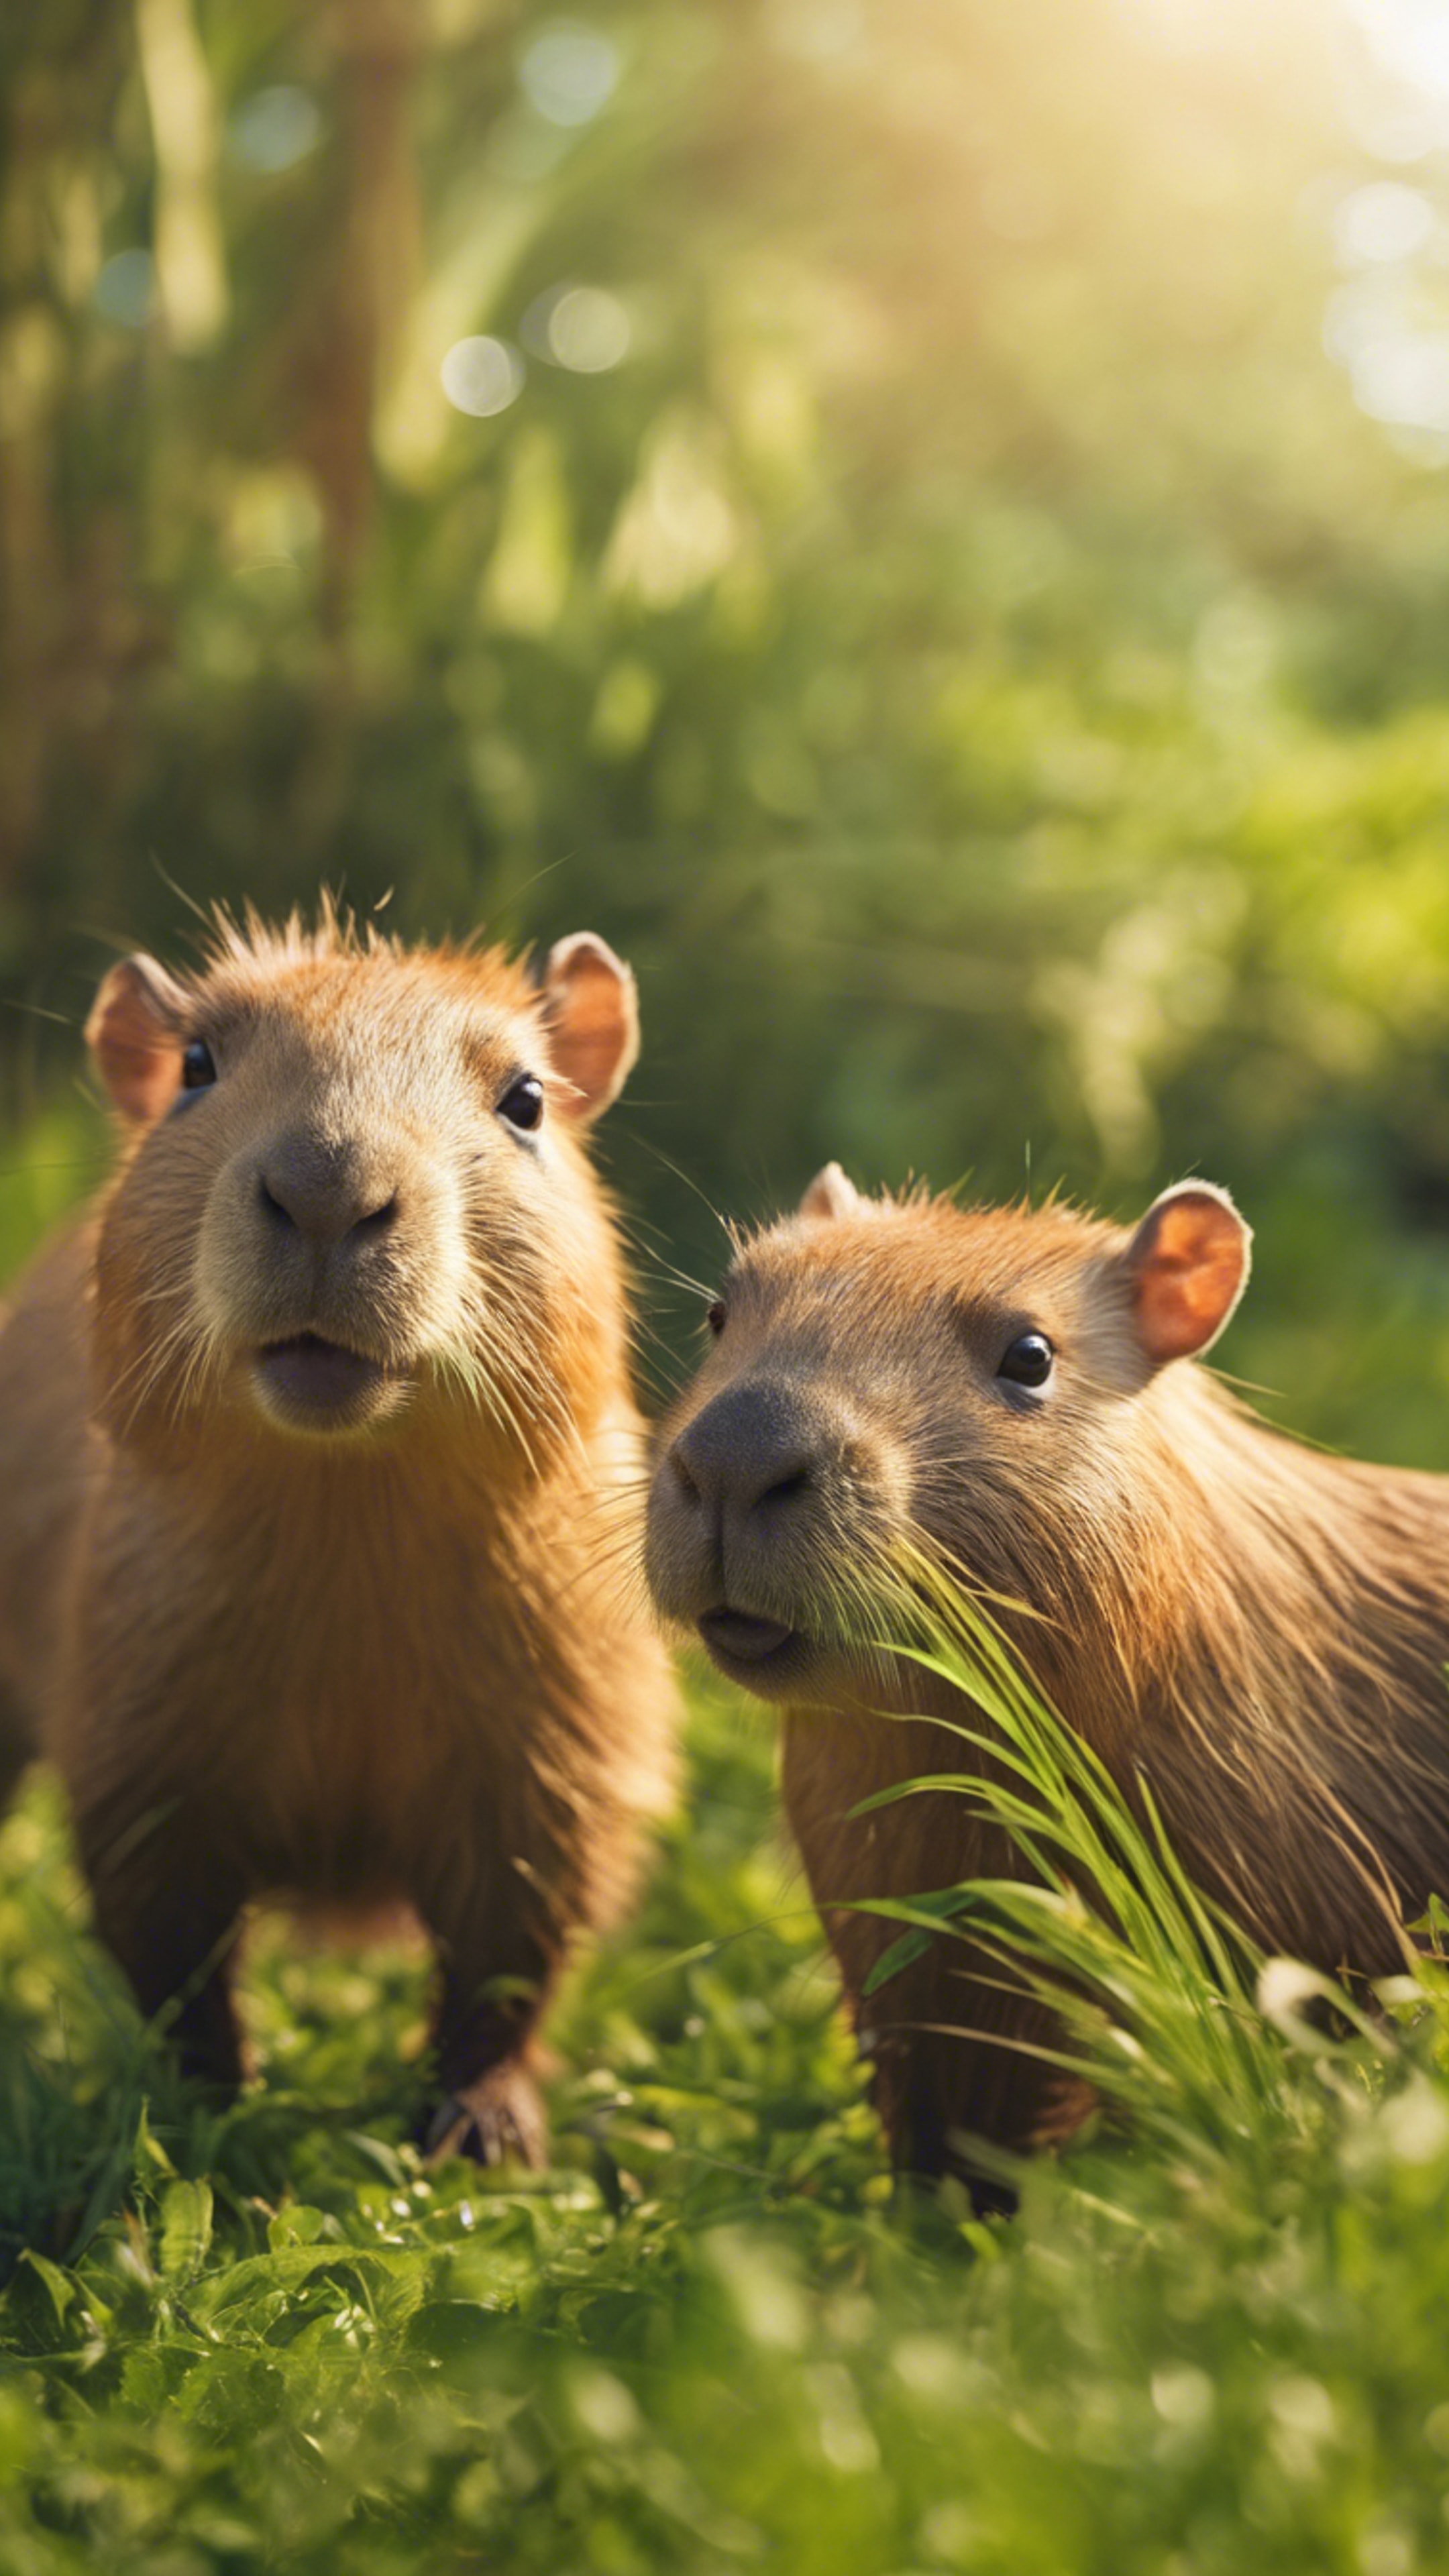 A group of playful capybara kids in a lush green meadow under the warm sunlight. 벽지[941f99d4da544970bae4]